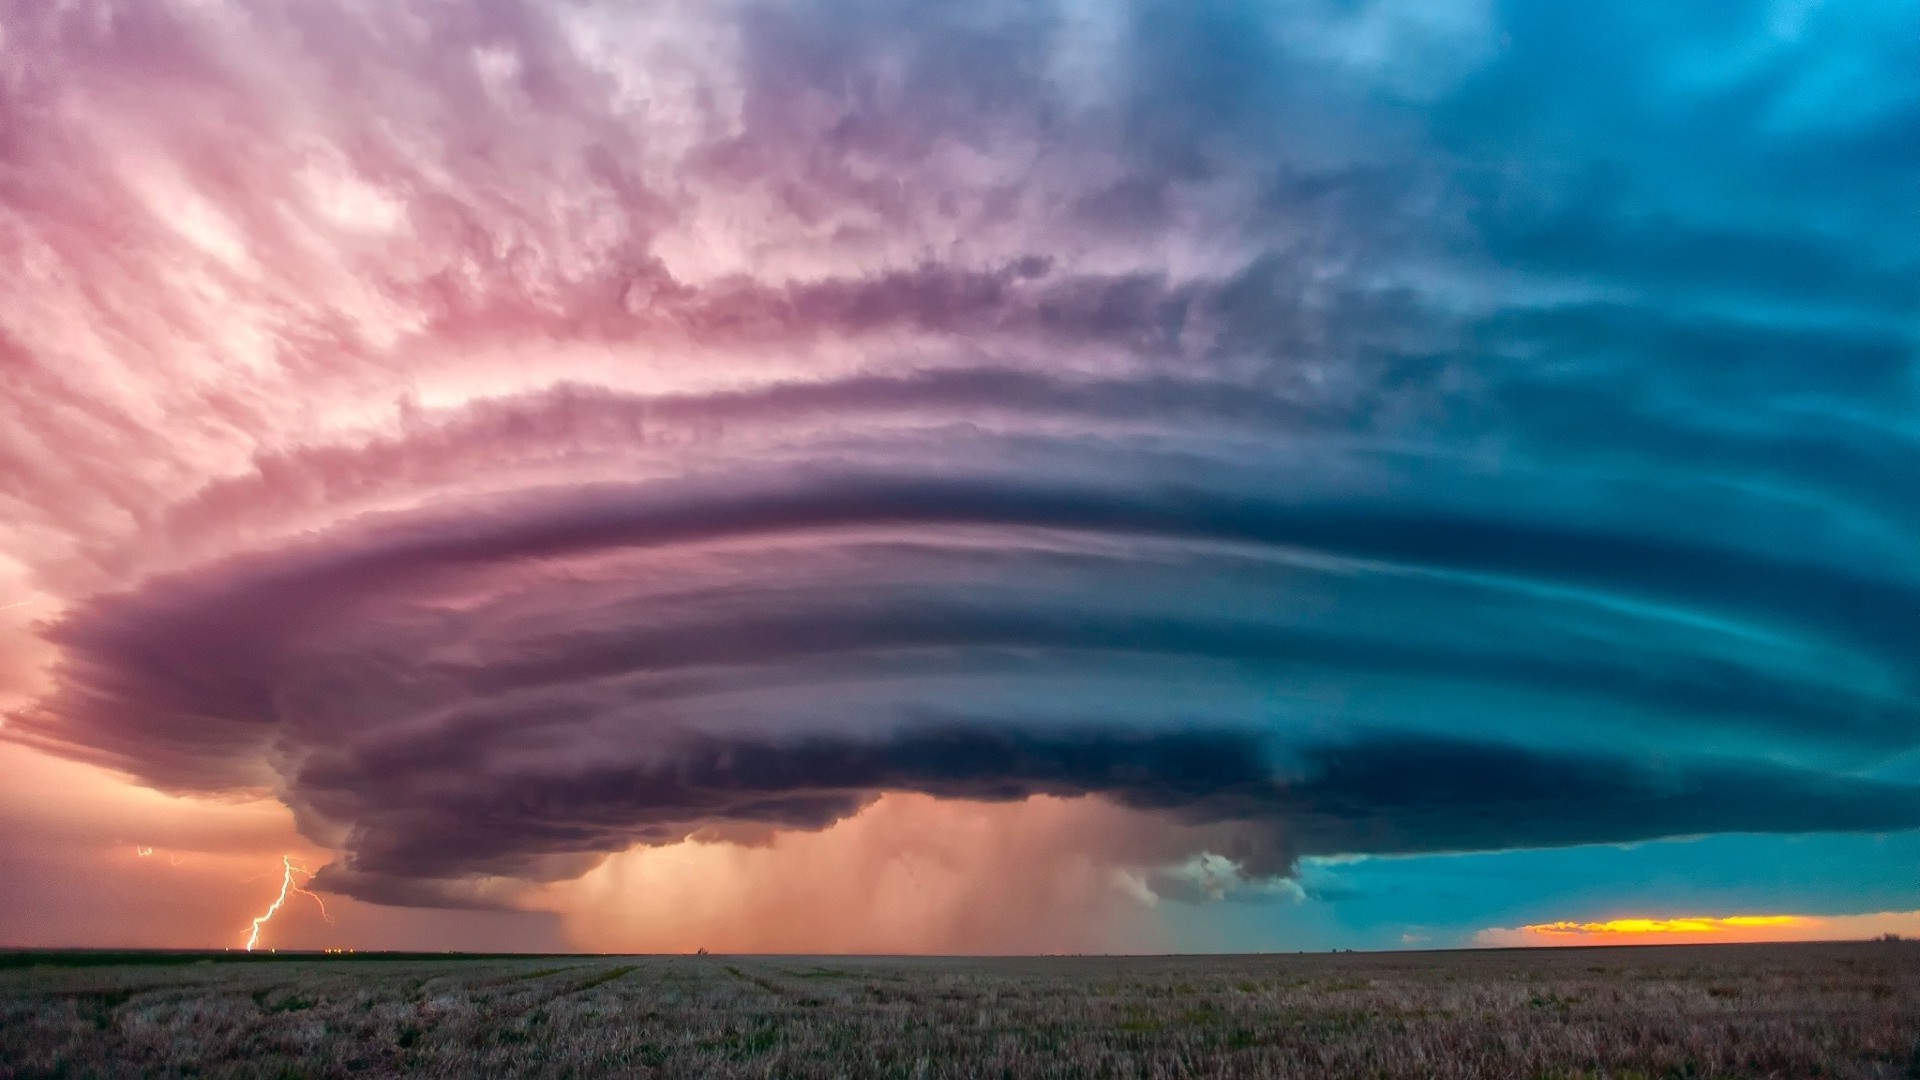 361594-Kansas_City-storm-clouds-landscape-photography-colorful-lightning.jpg